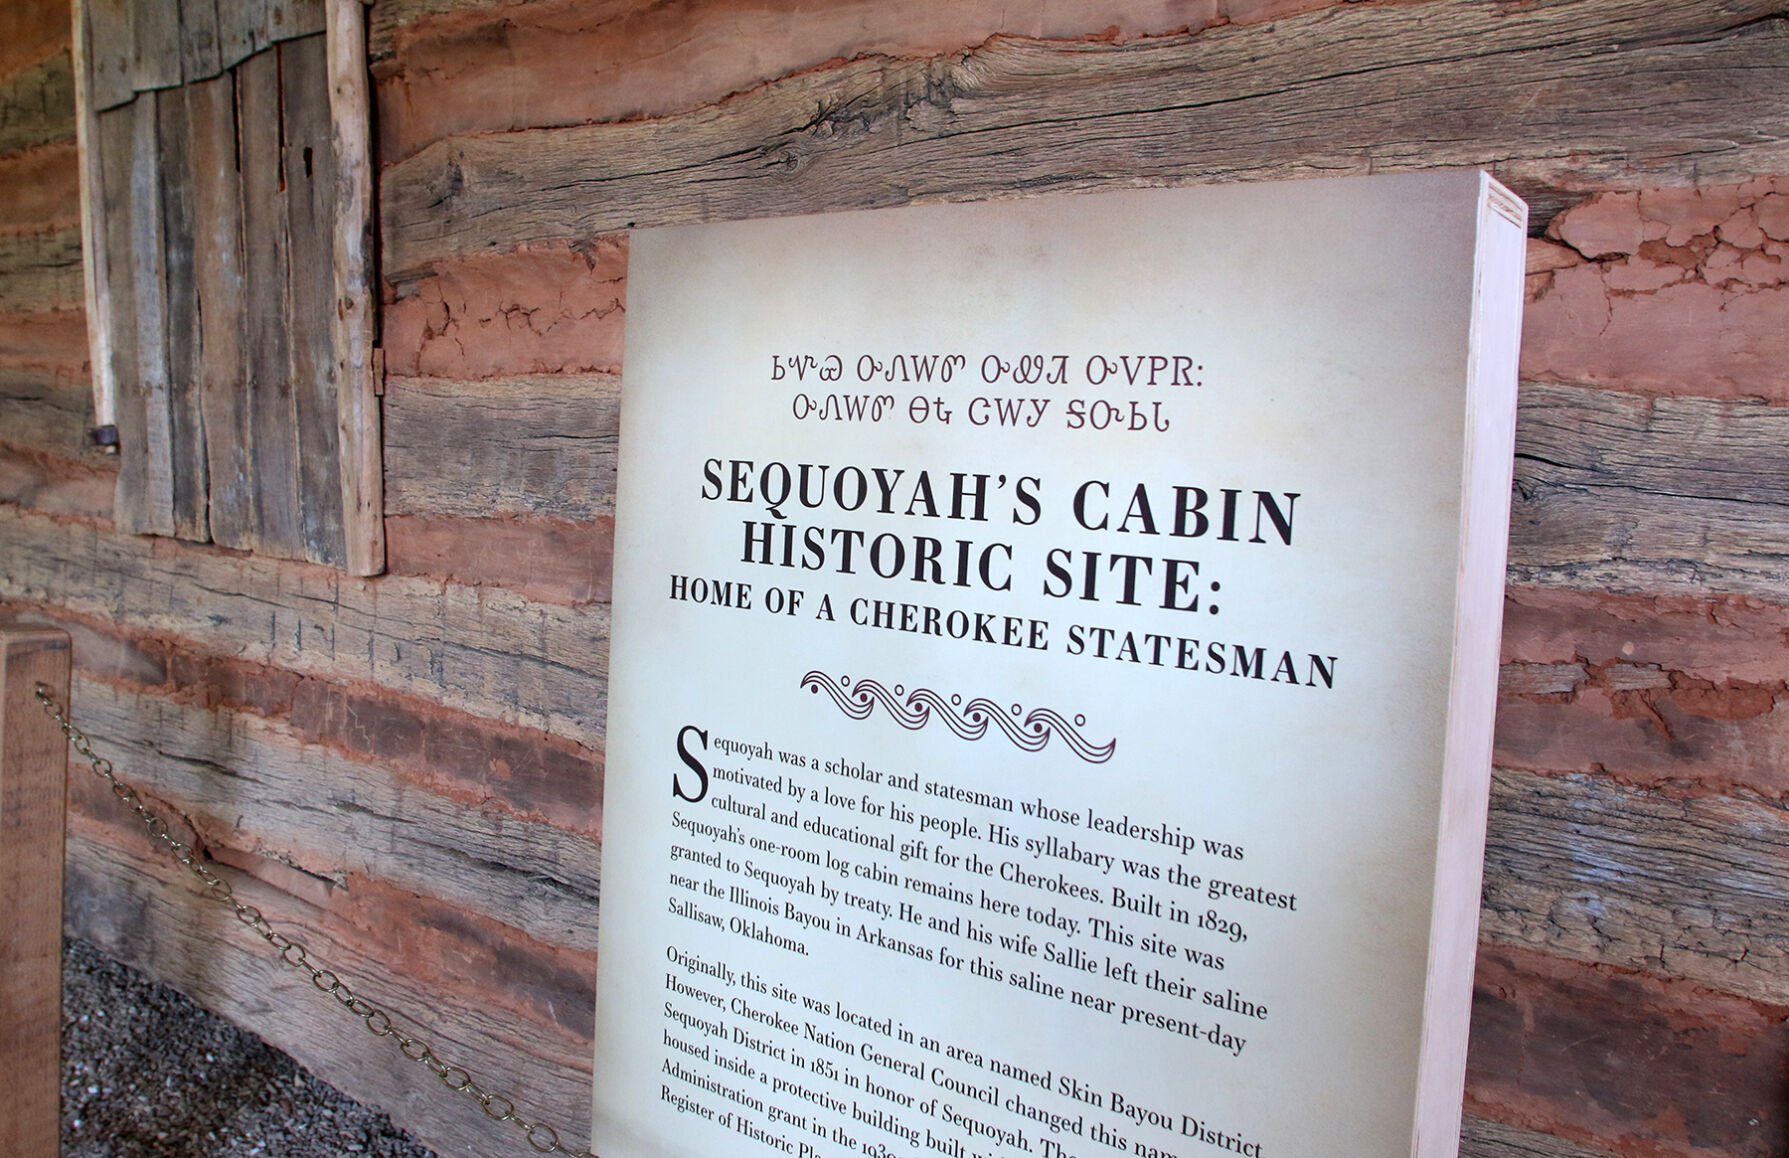 Cherokee Nation restoring, relocating historic cabin in Sequoyah County